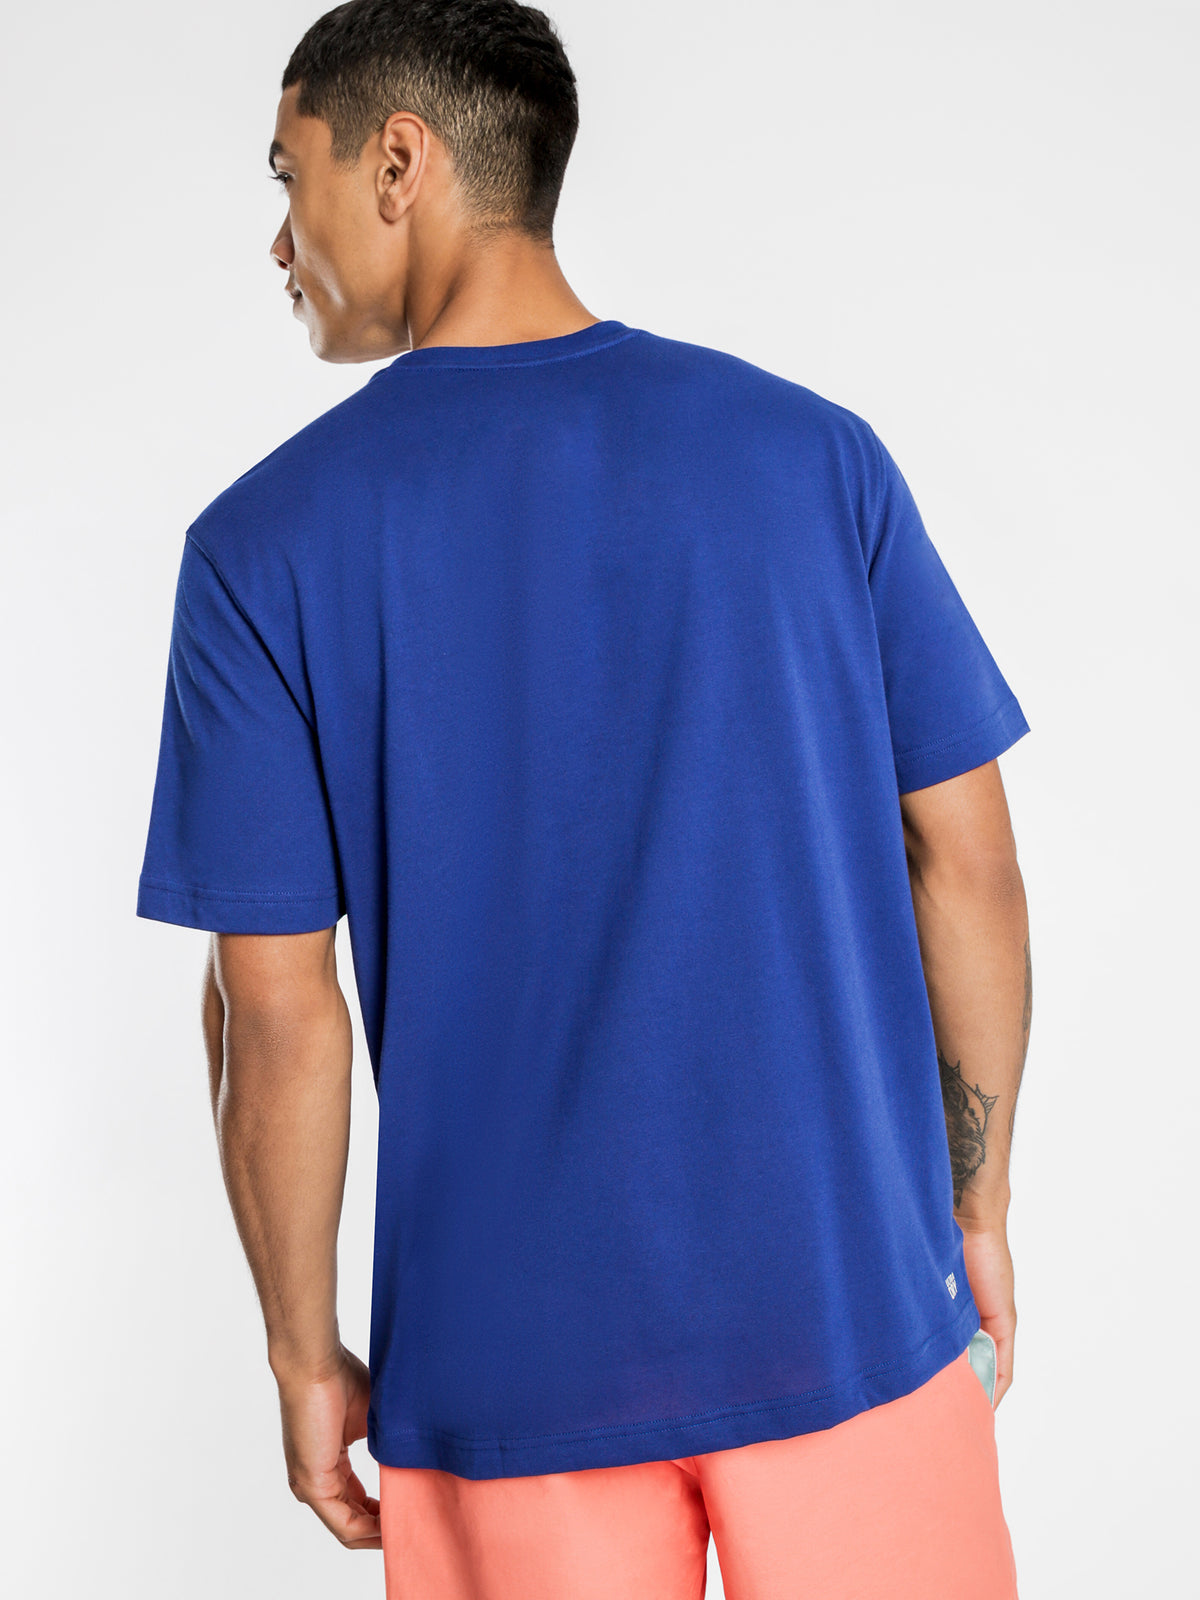 Basic Crew Neck T-Shirt in Cobalt Blue